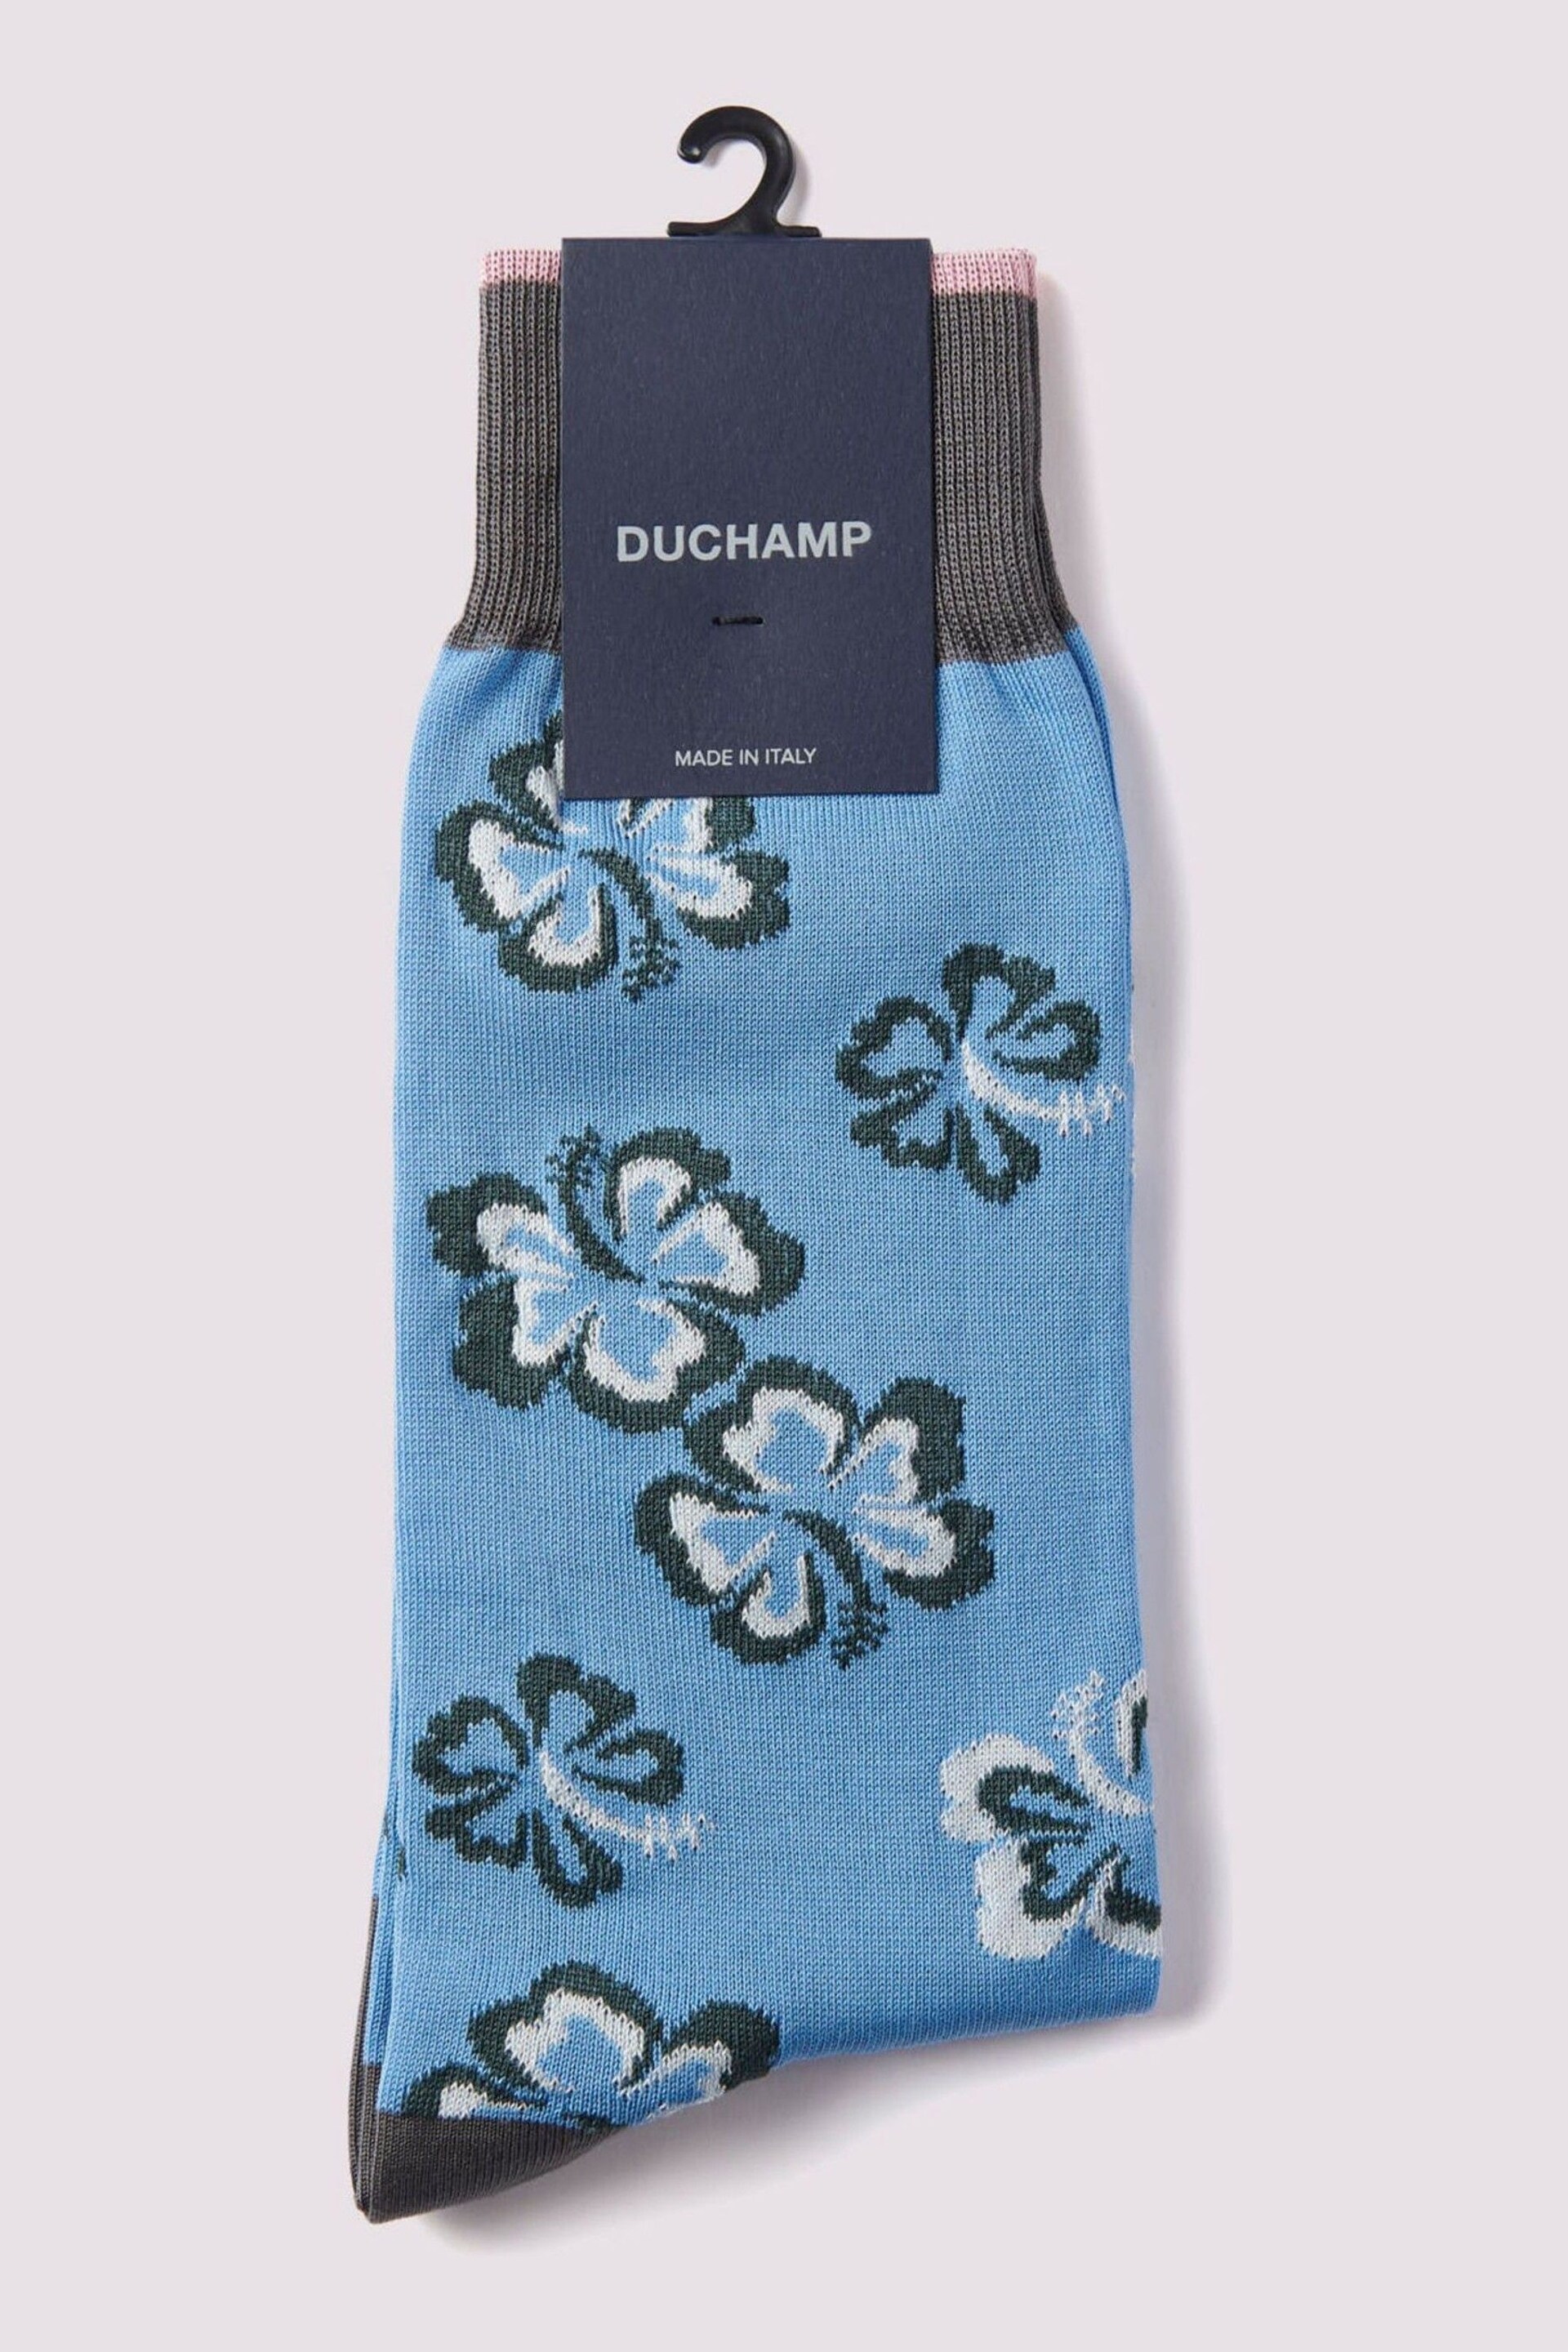 Duchamp Blue Hibiscus Floral Socks - Image 1 of 3